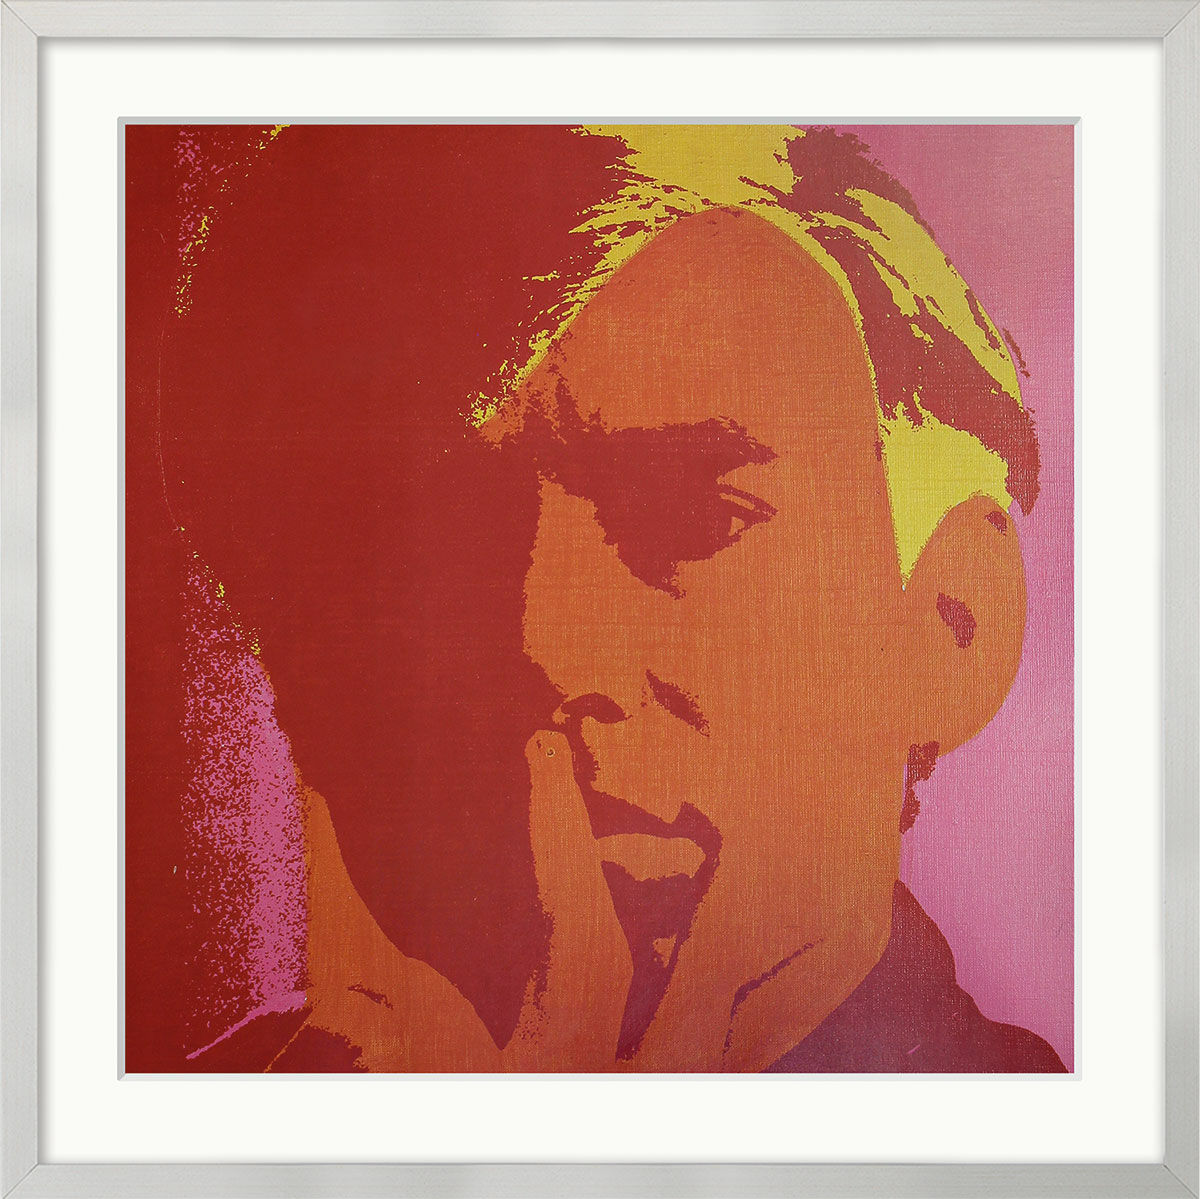 Beeld "Zelfportret" (1993), ingelijst von Andy Warhol